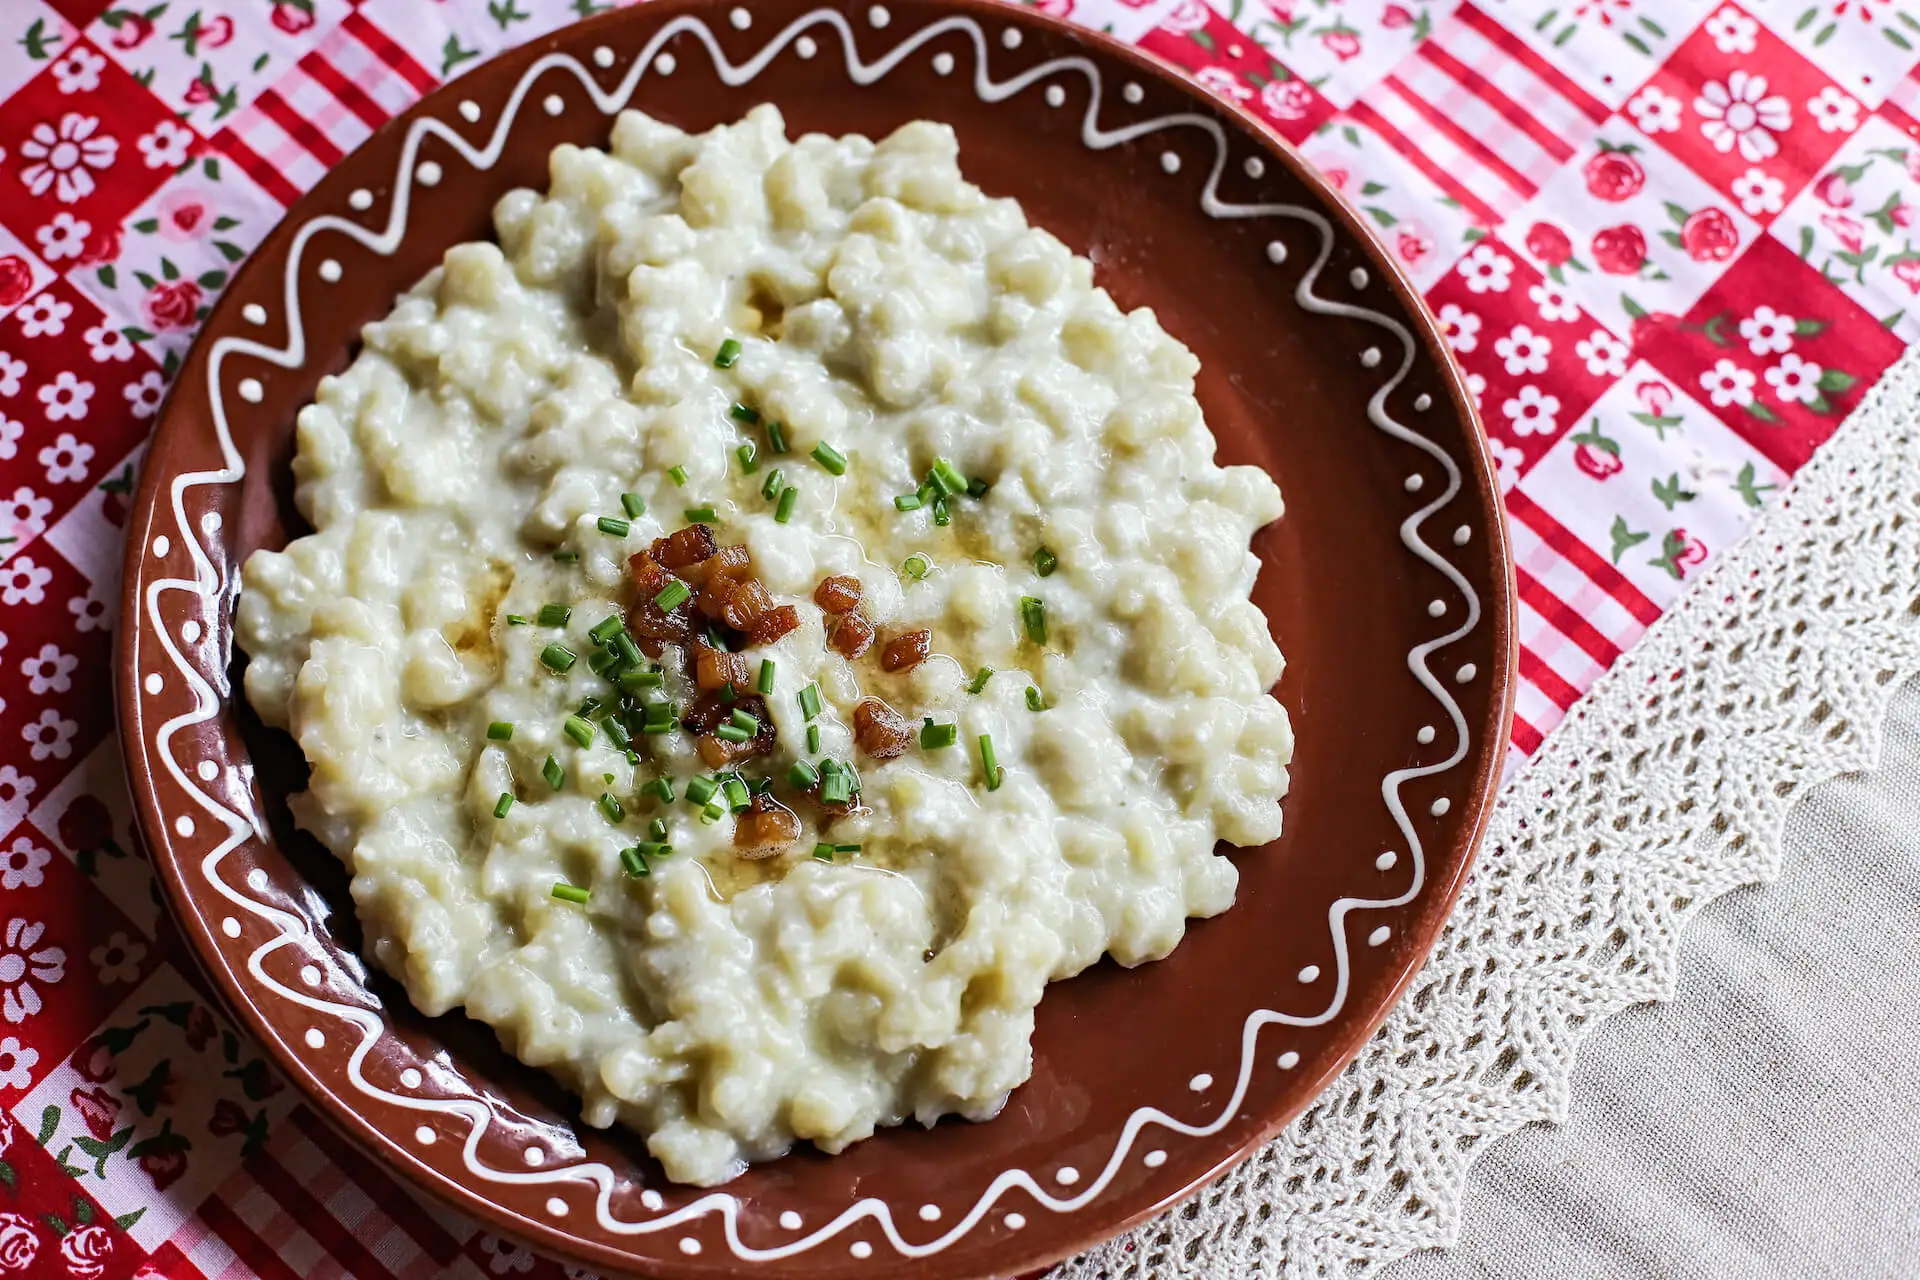 Halušky - Traditional Slovak food